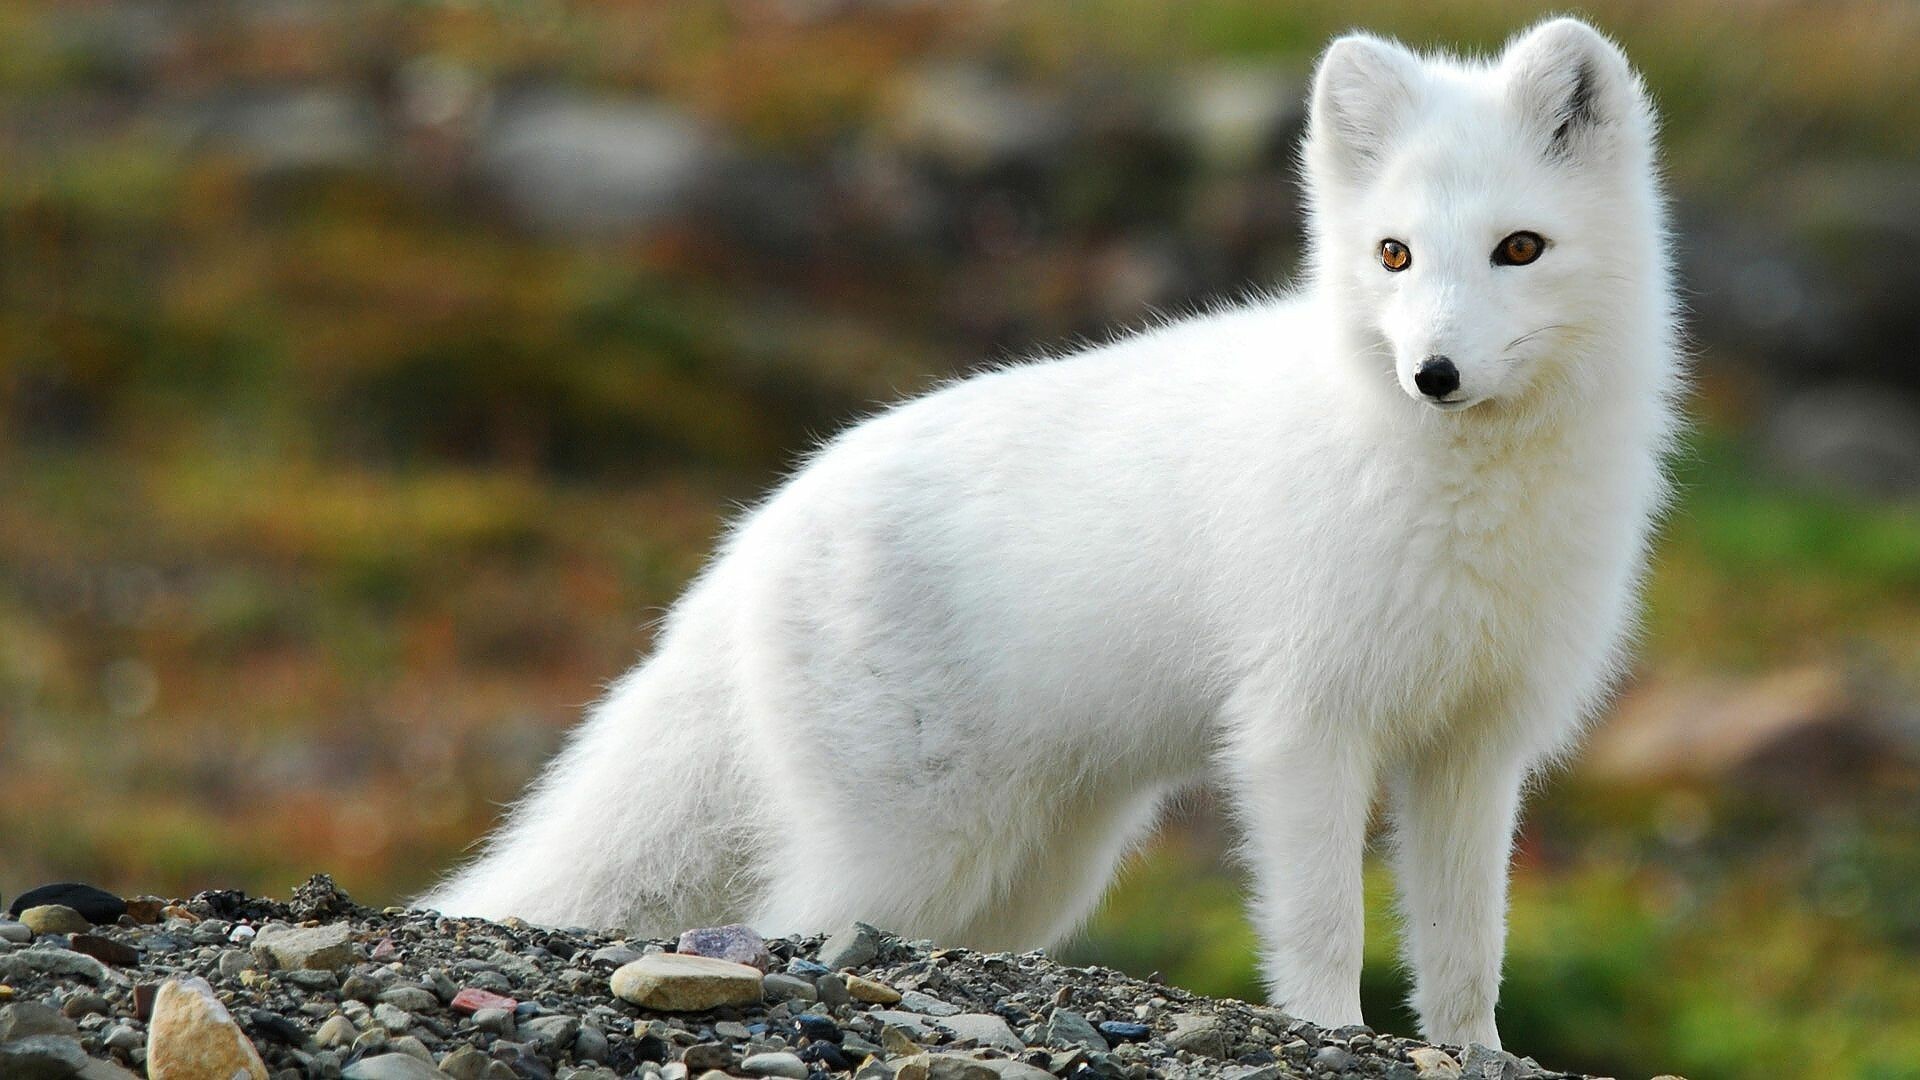 Fox: Vulpes lagopus, A small animal native to the Arctic regions. 1920x1080 Full HD Wallpaper.